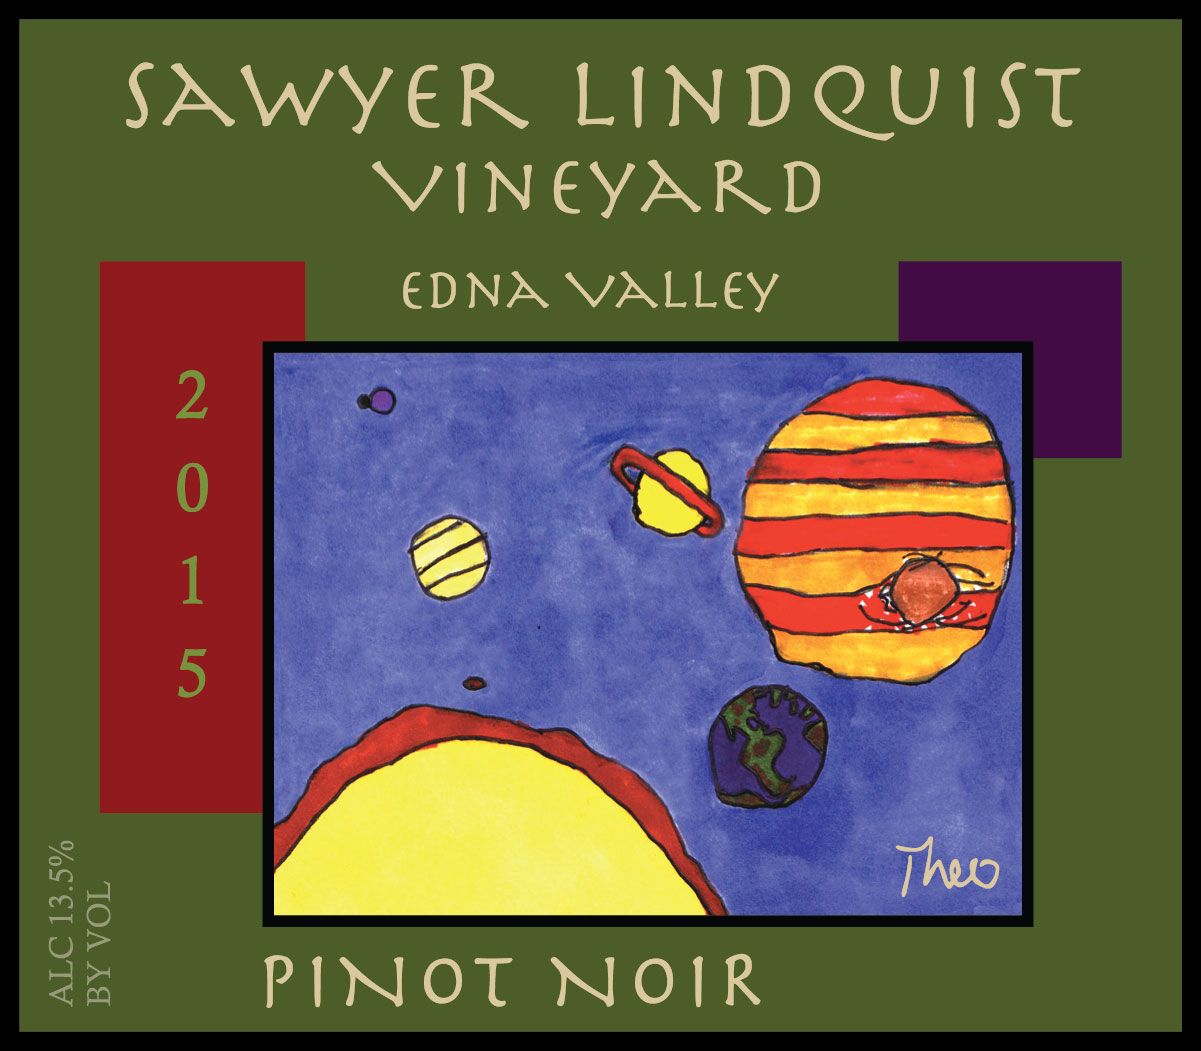 Verdad Sawyer Lindquist Vineyard Pinot Noir 2015